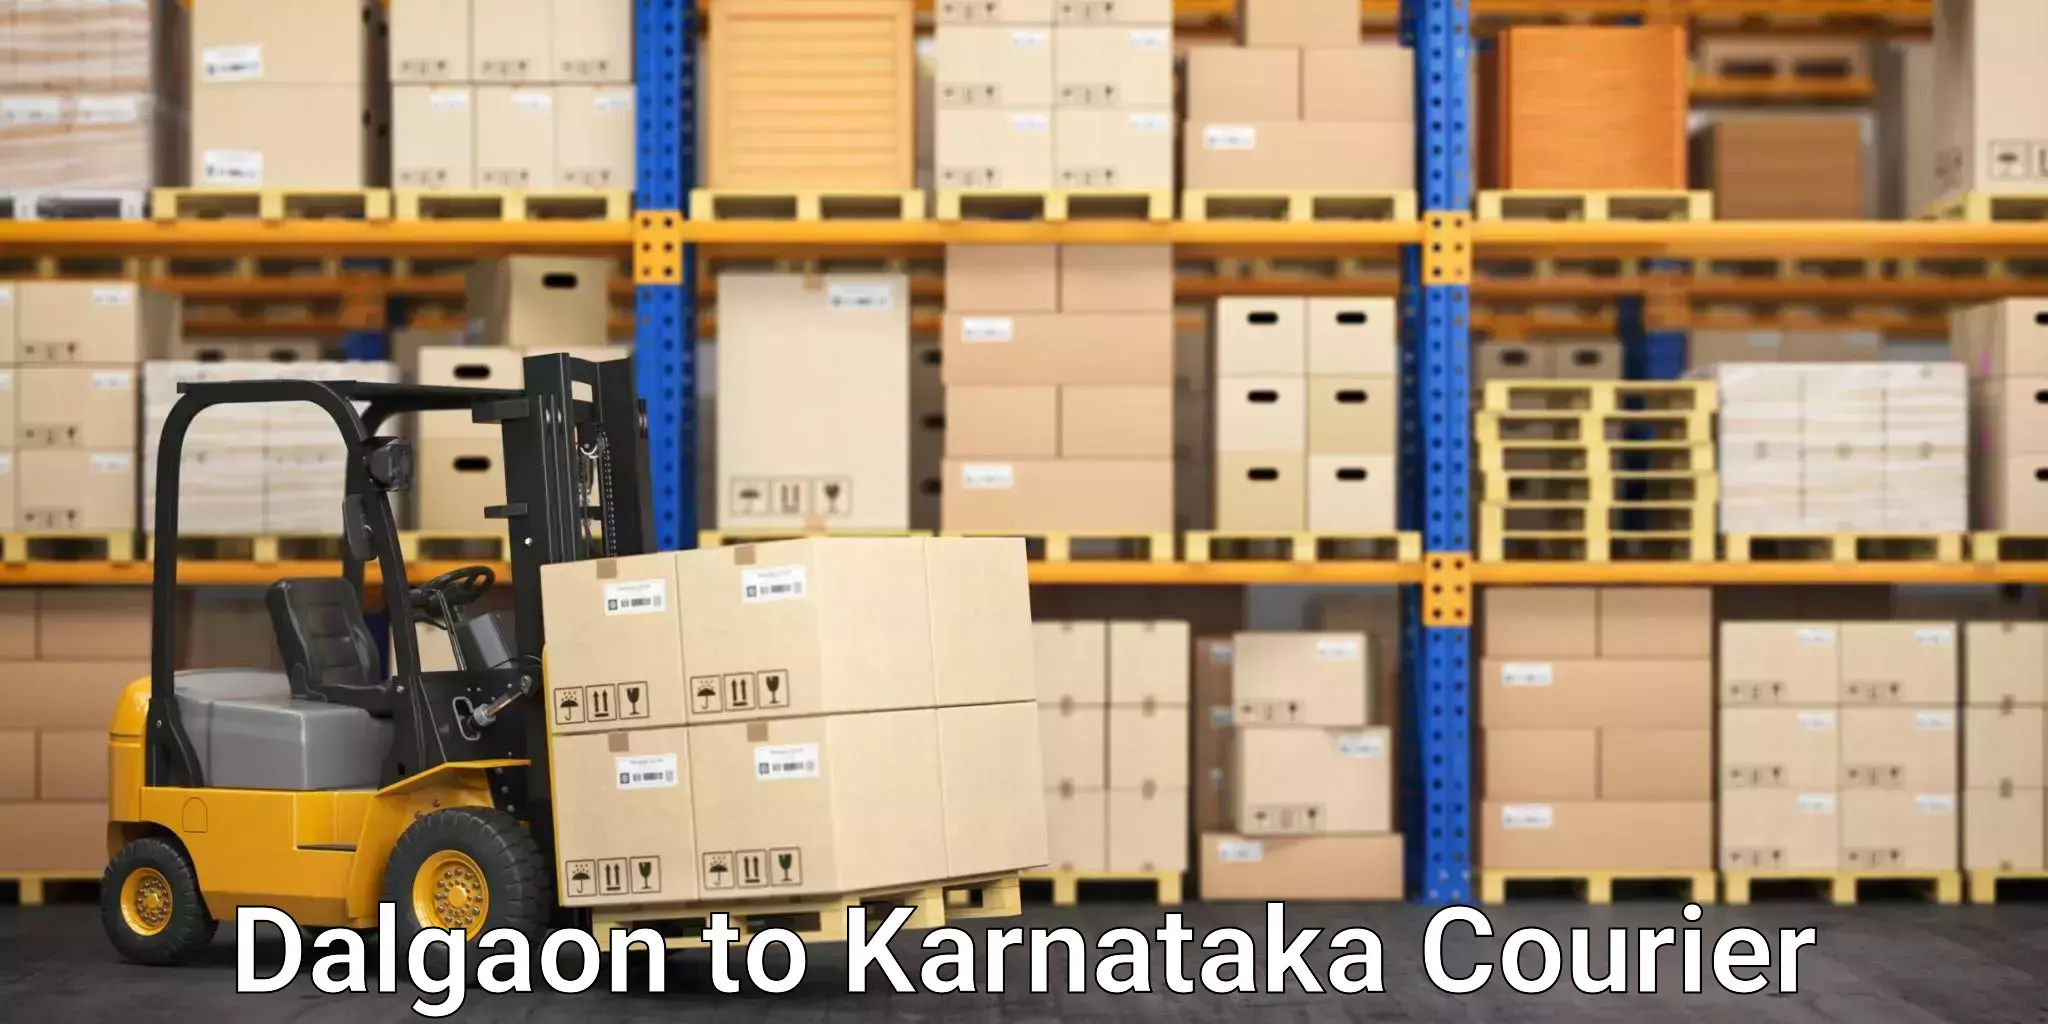 Smart logistics solutions Dalgaon to Karnataka